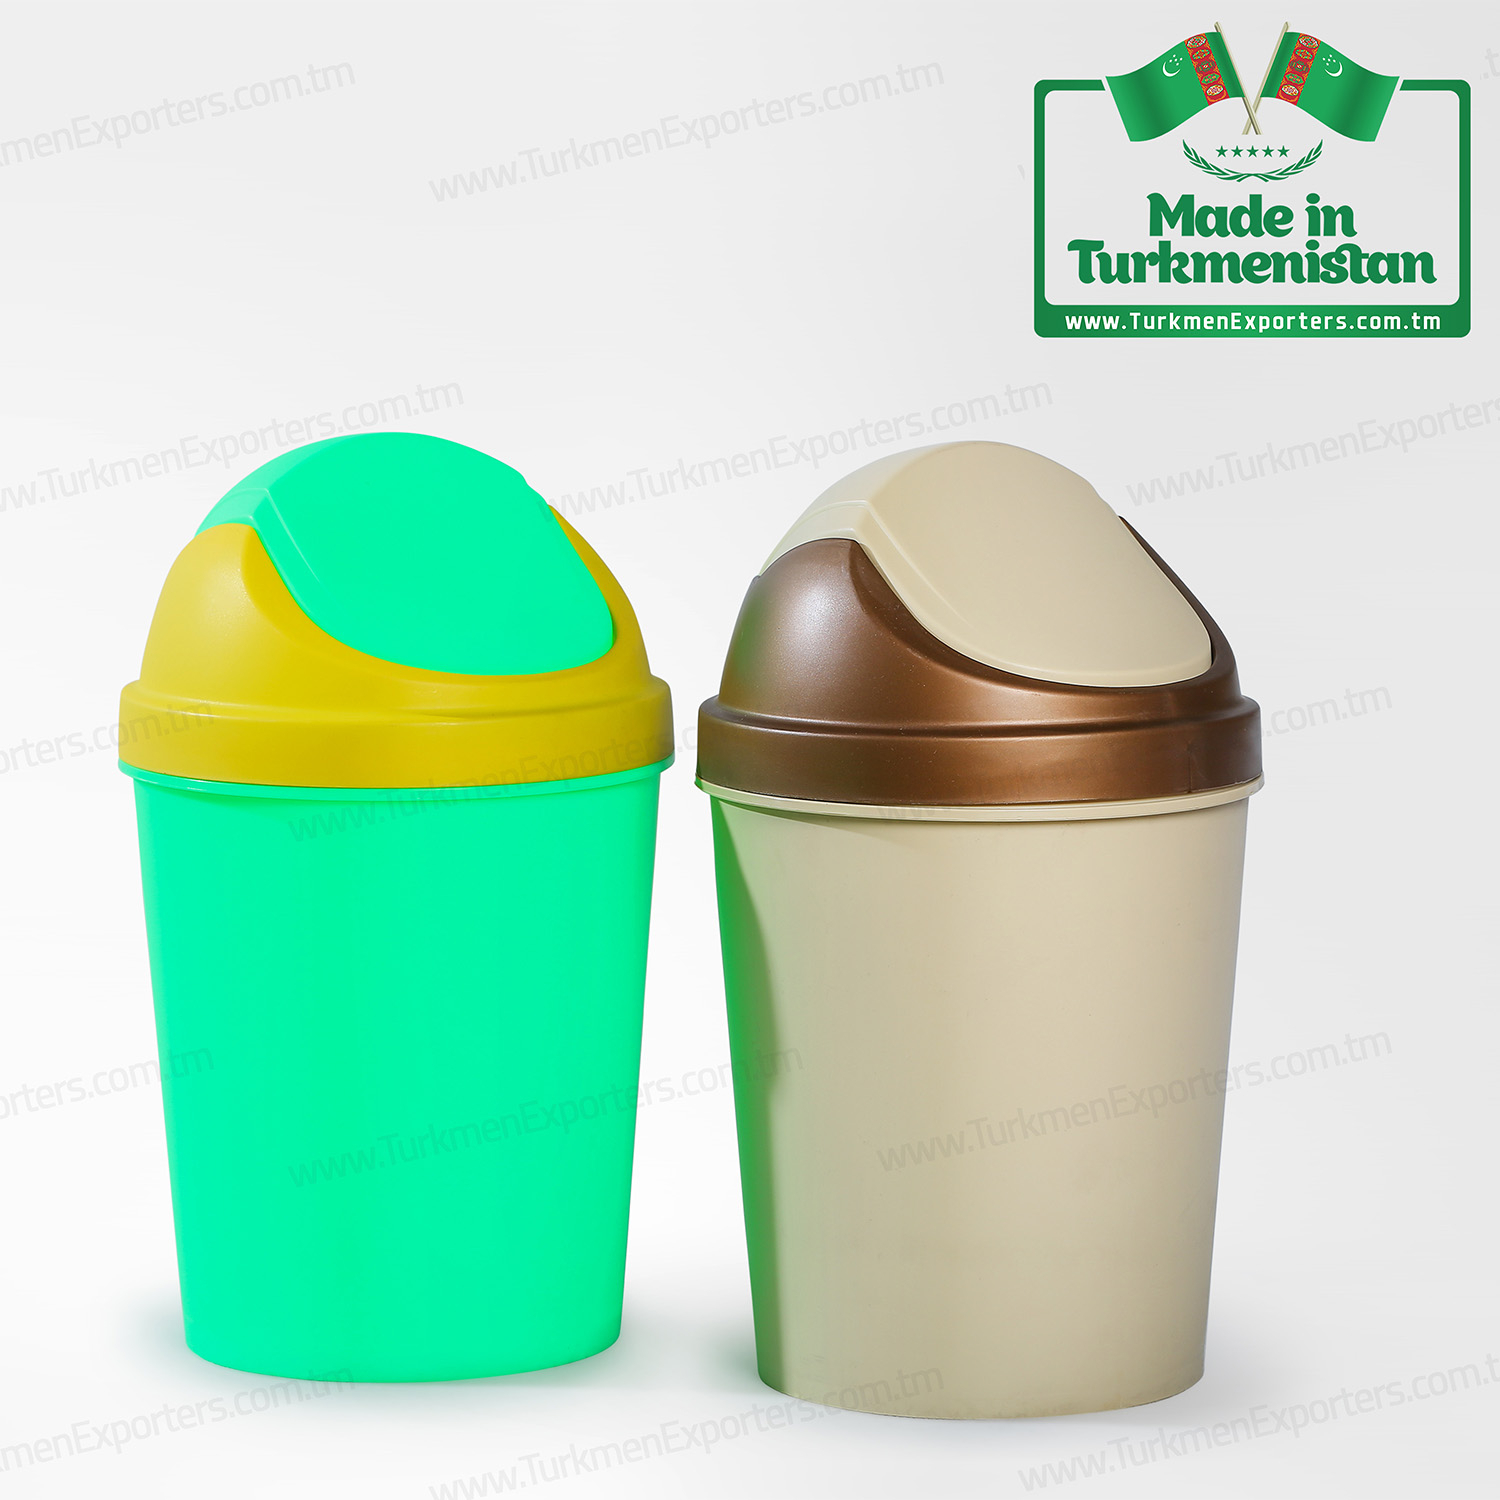 Plastic dustbin wholesale for export from Turkmenistan | Turkmen Shohle economic society